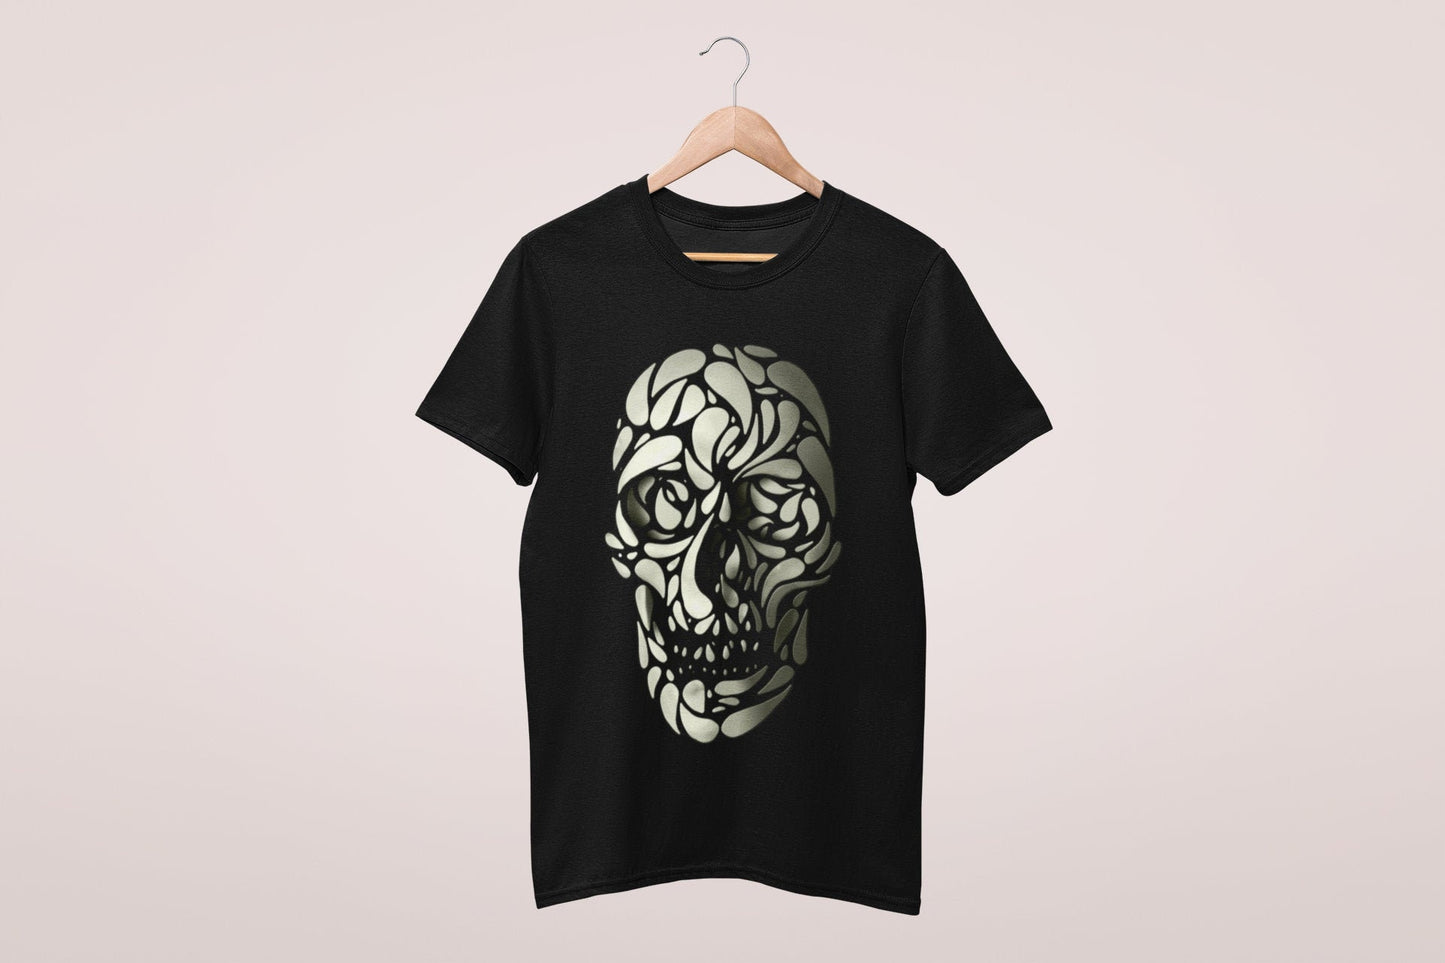 Mens Skull Tshirt, Black And White Skull T shirt, Man Gothic Clothing, Sugar Skull Shirt Gift For Him, Gothic Skull Tshirt